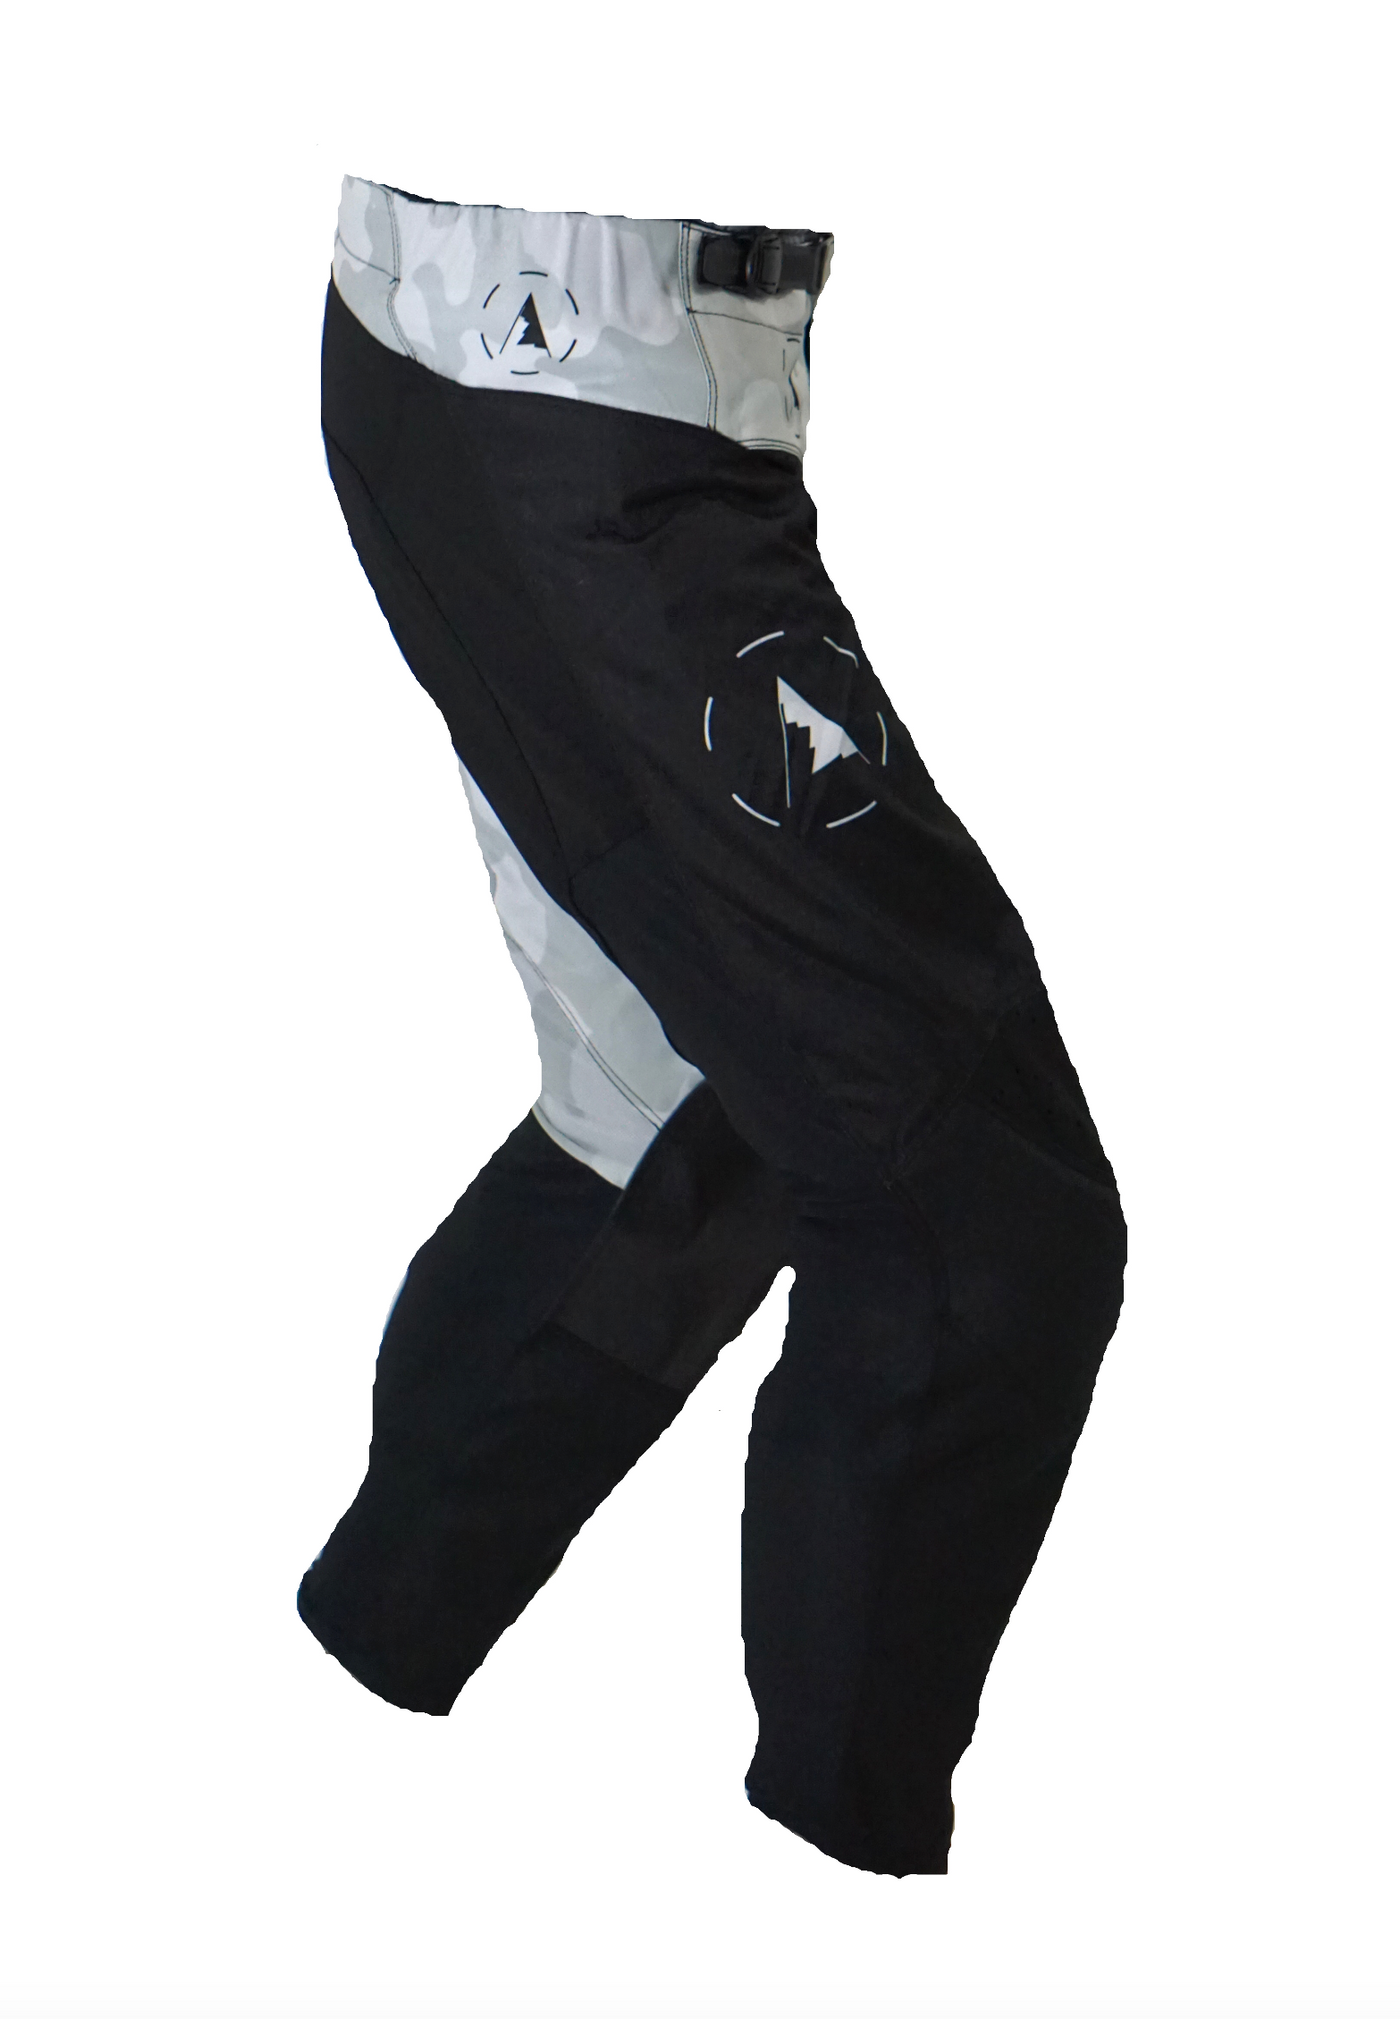 Pants Mx 22 - St-Cyr Limited Edition